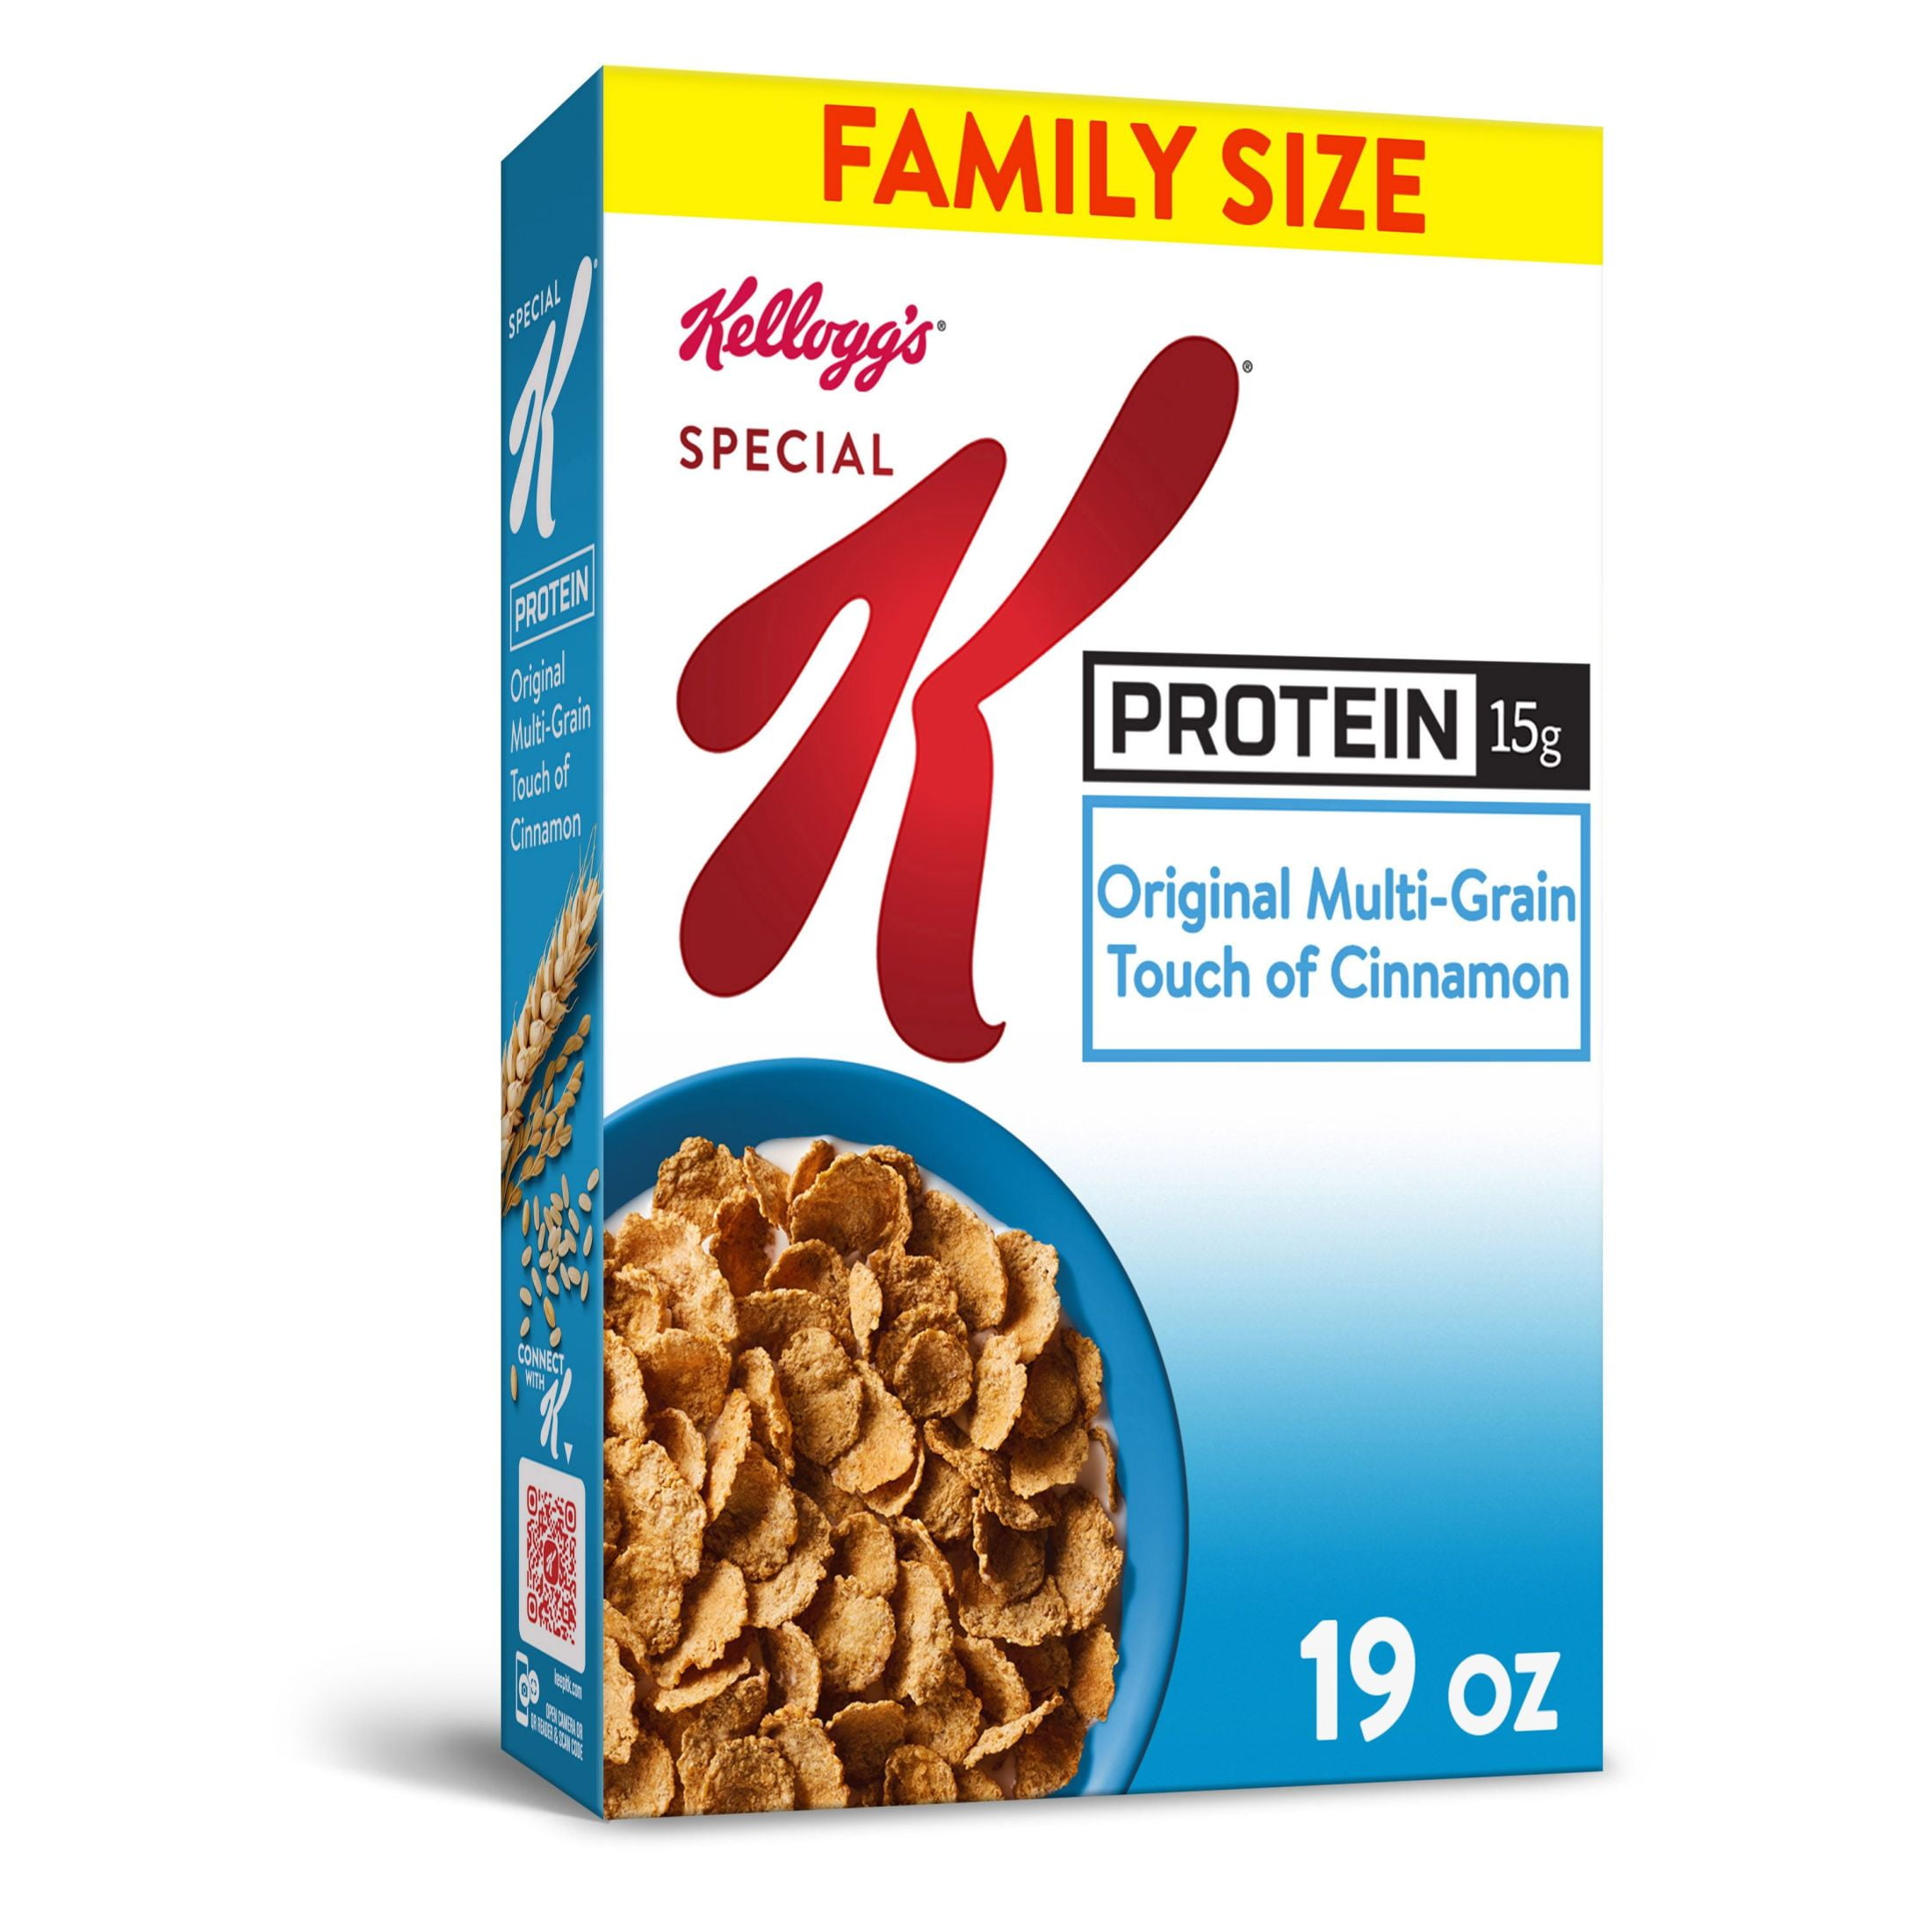 Kellogg's Special K Original Multi-Grain Touch of Cinnamon Protein Cold Breakfast Cereal, 19 oz